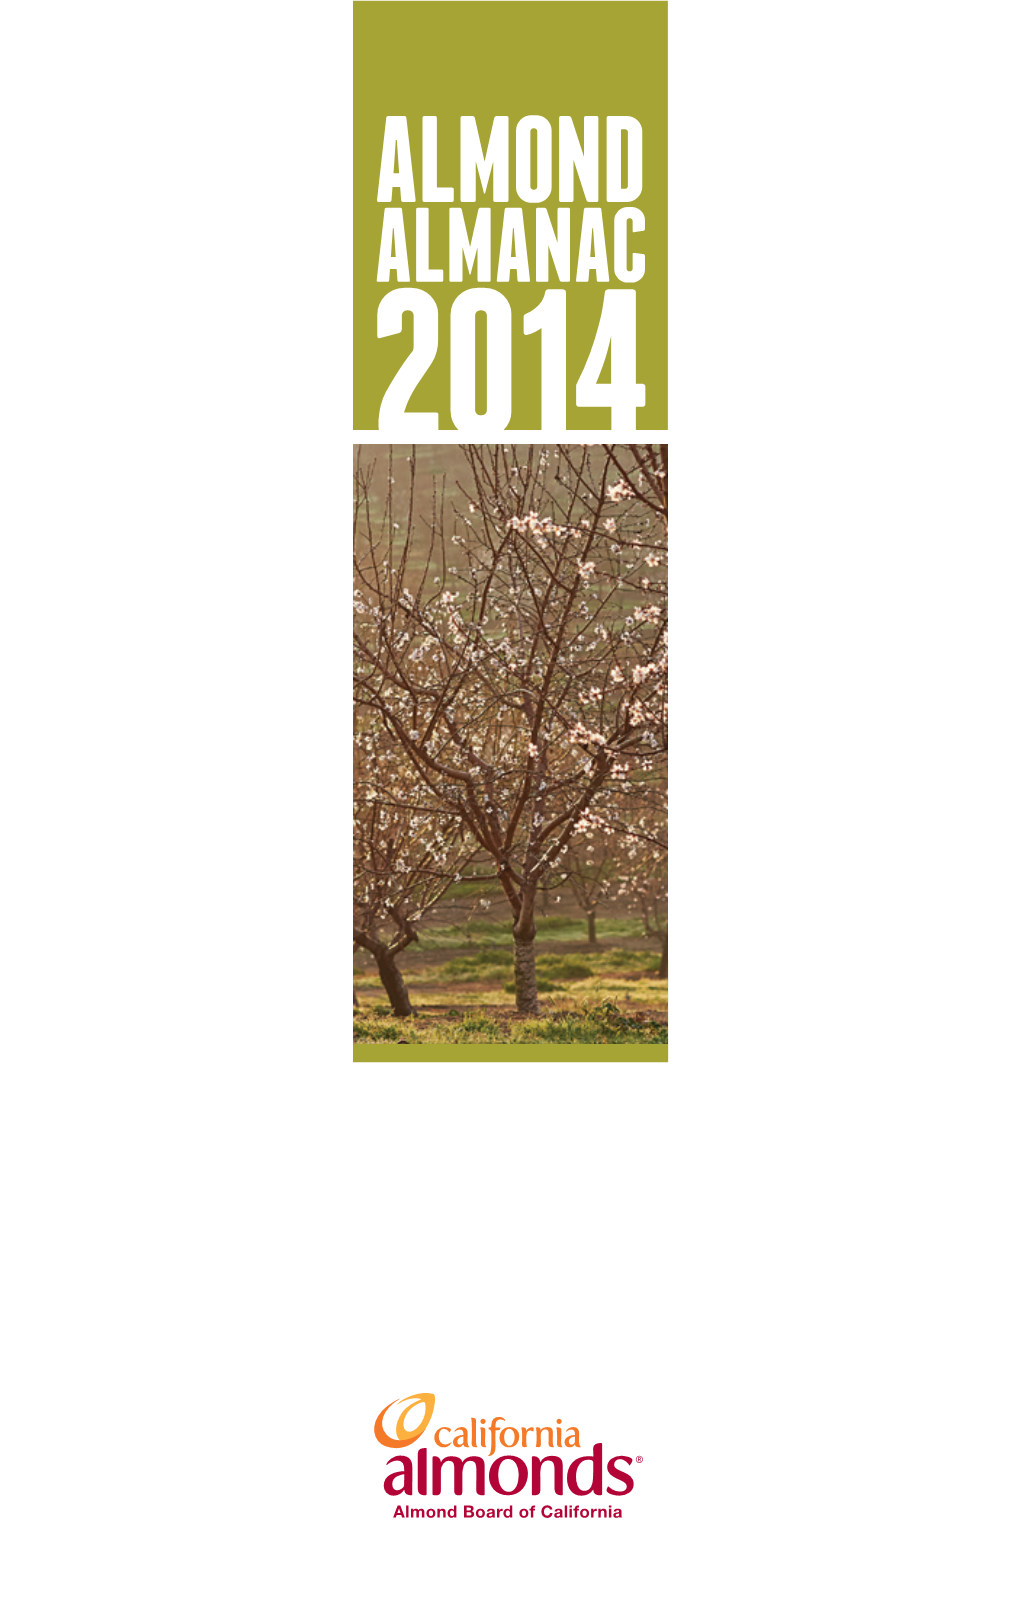 Almond Almanac 2014